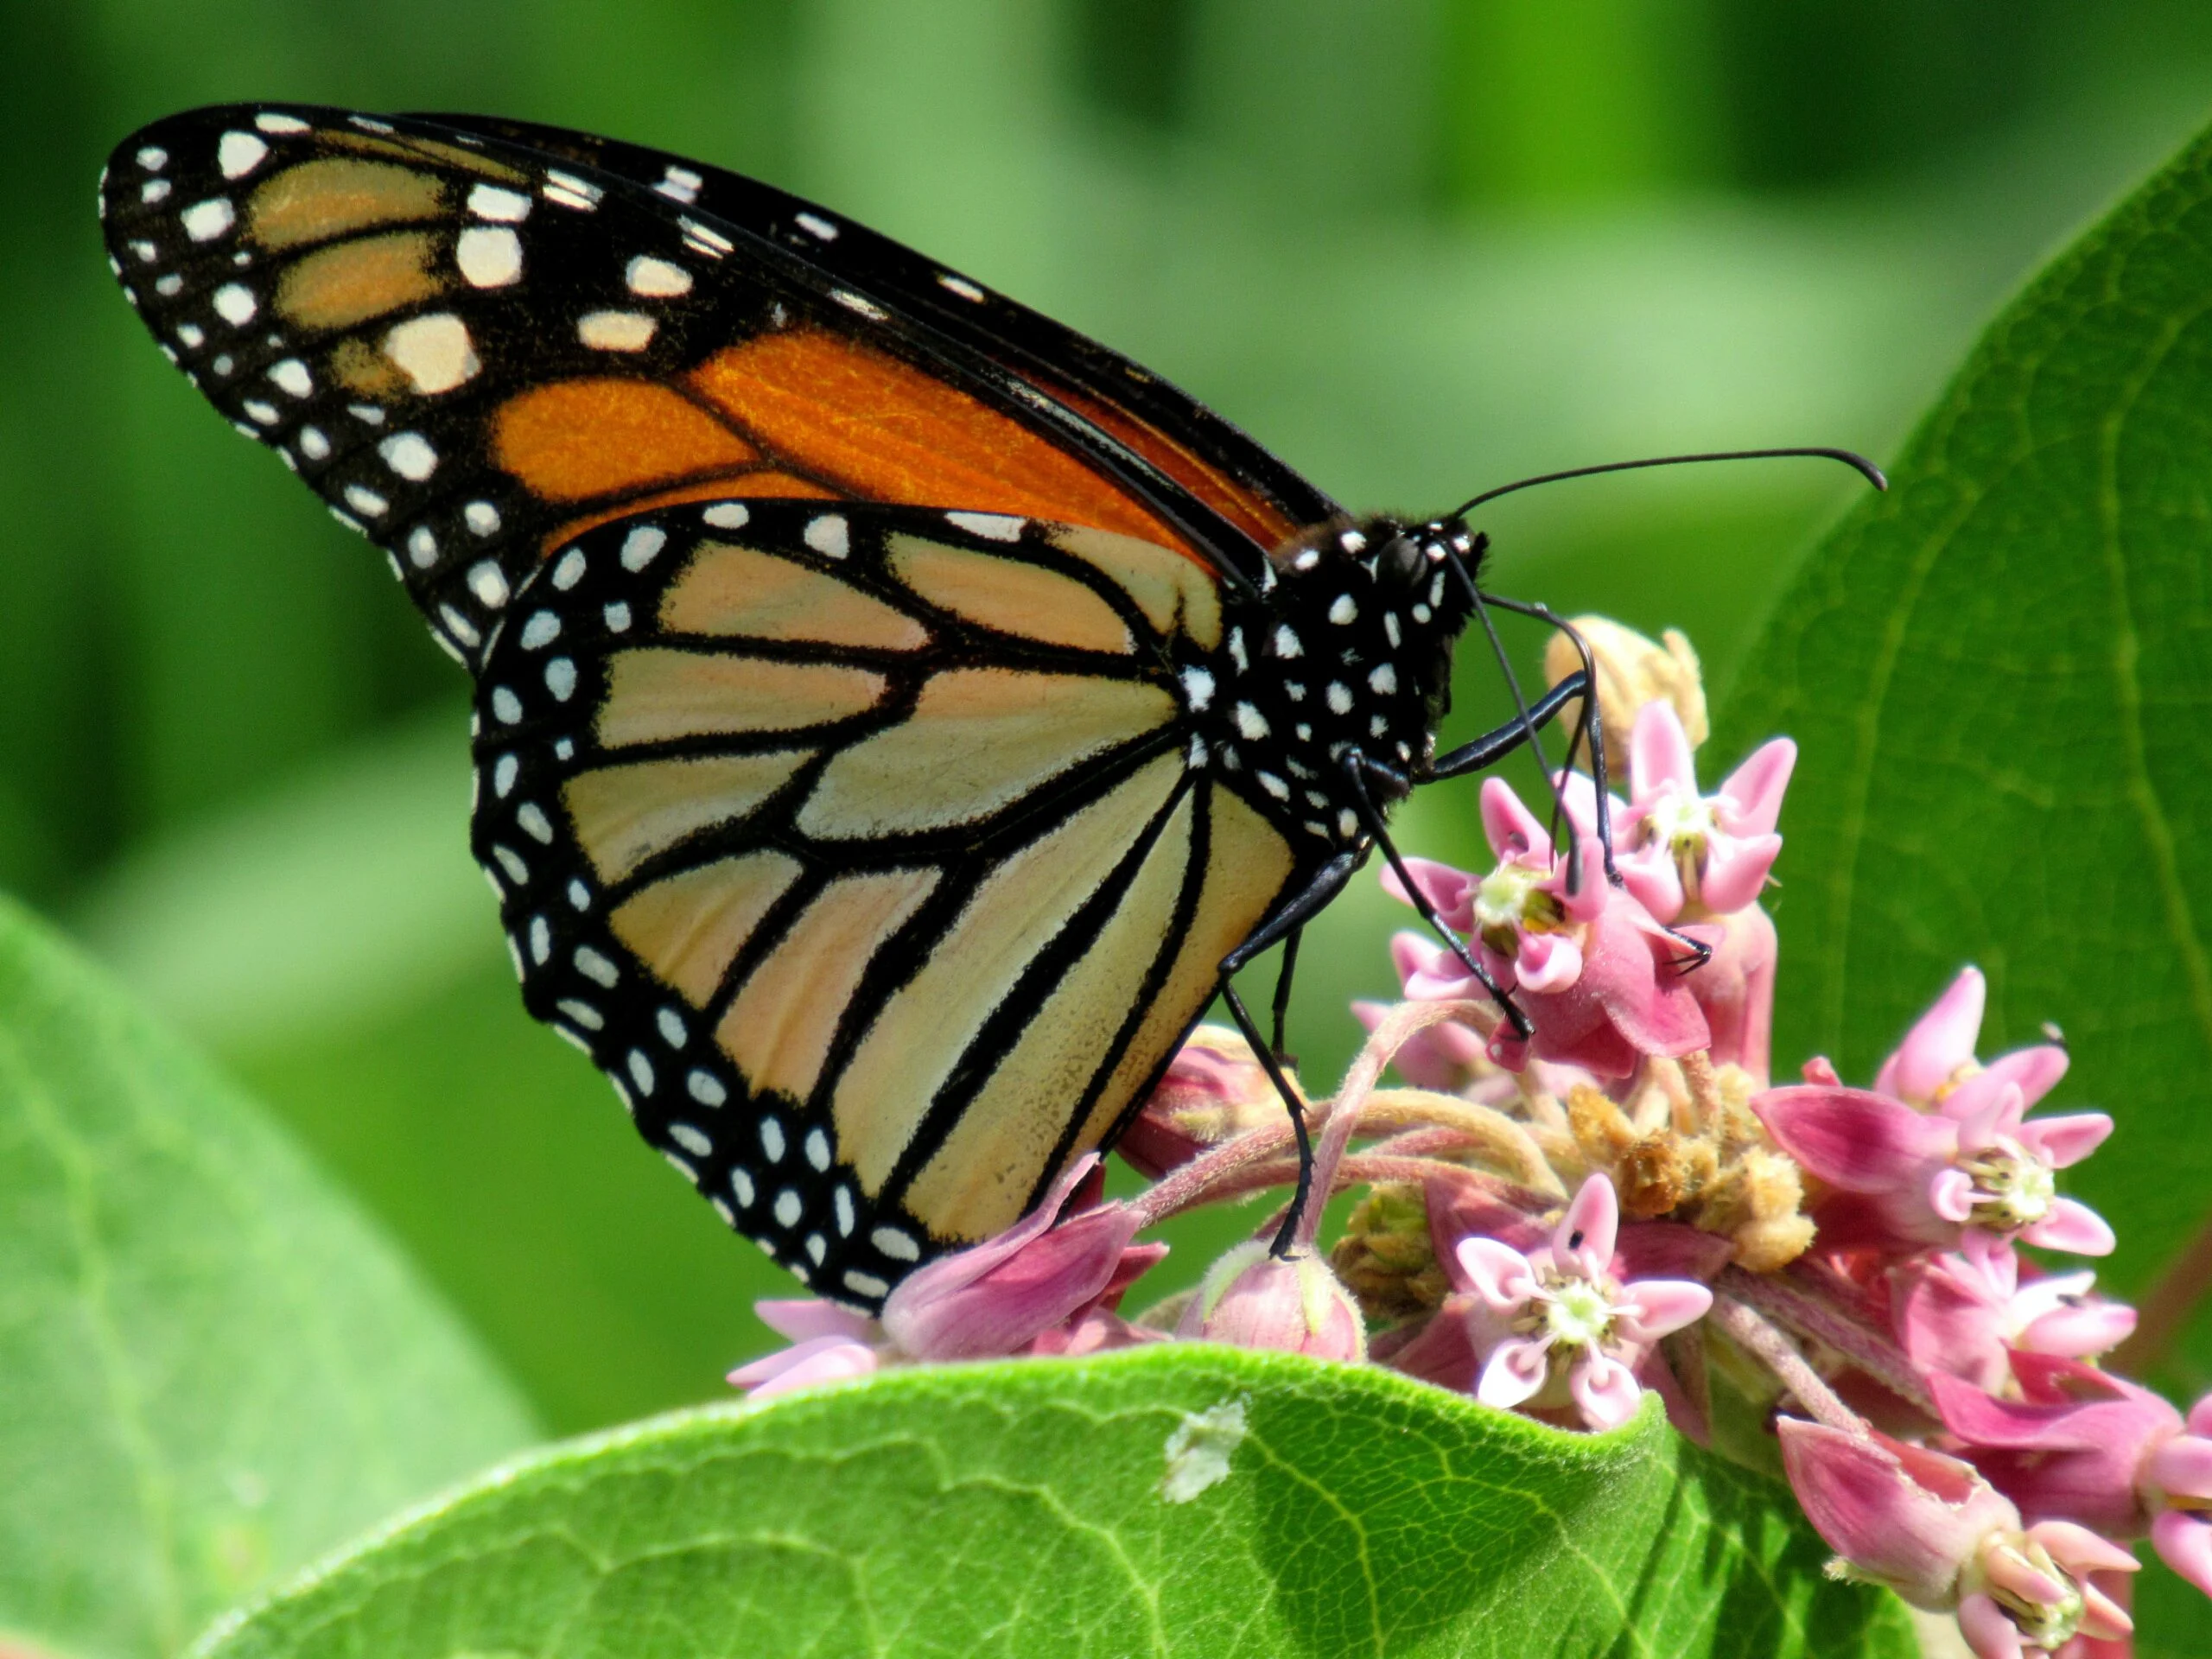 chi-girls-Monarch butterfly feeding on pollen-JhMaT8-unsplash-scaled